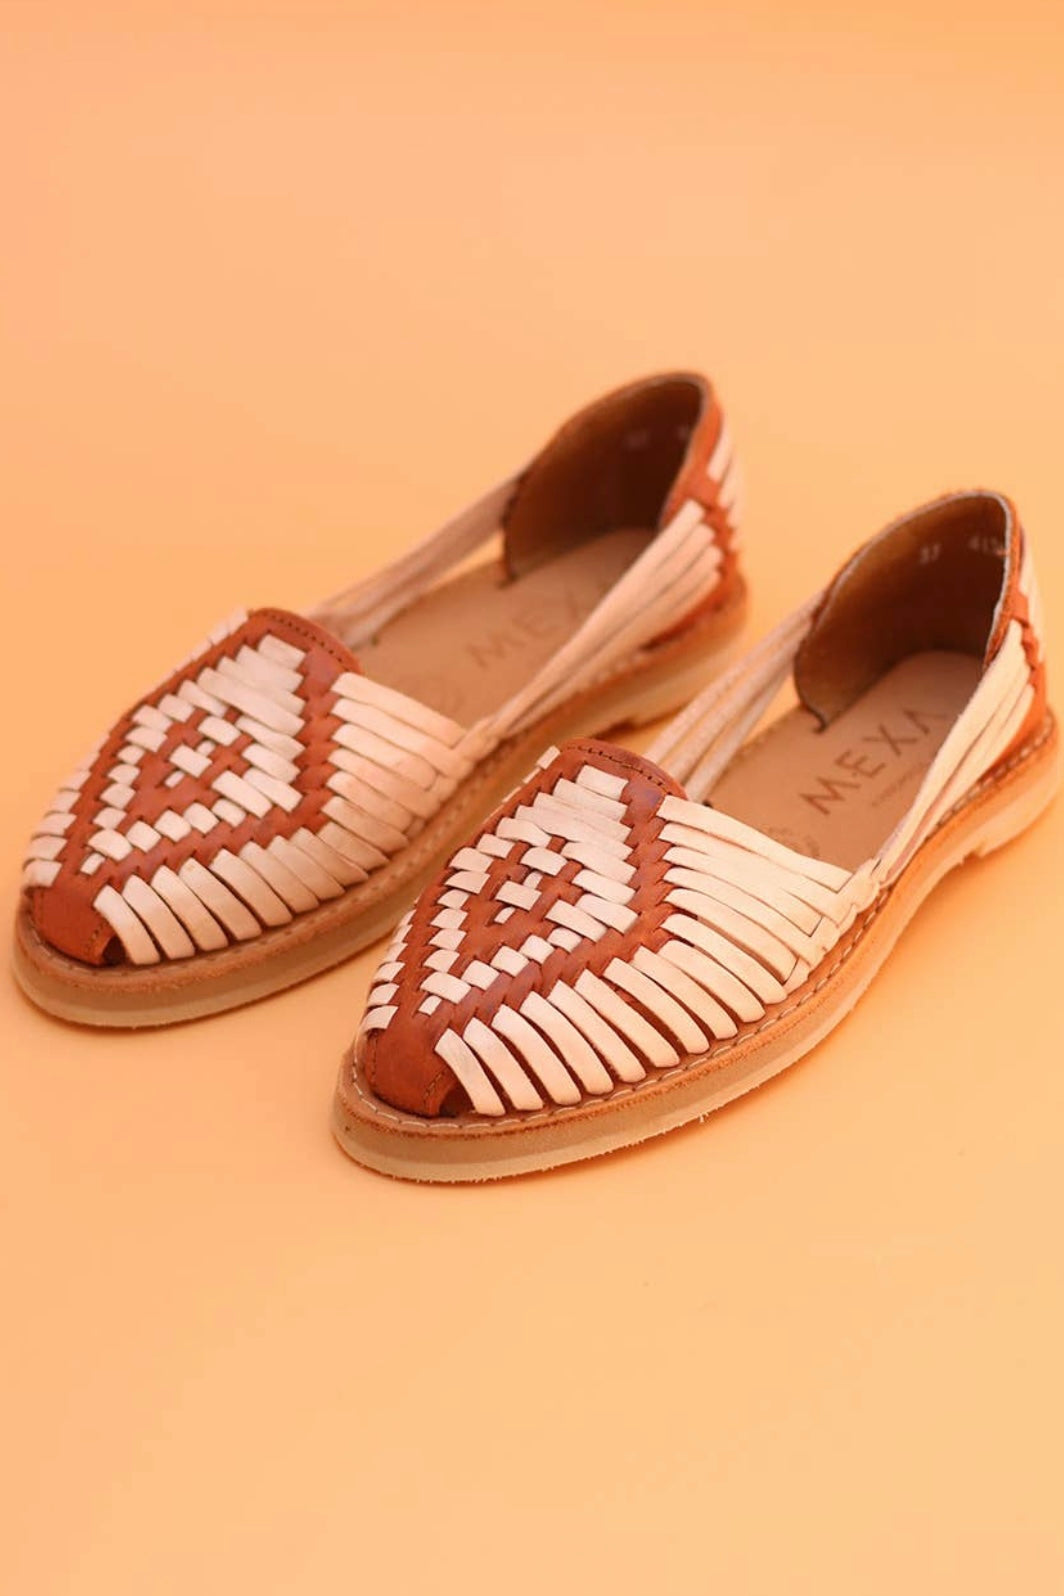 MEXAS Zicatela Leather Sandals